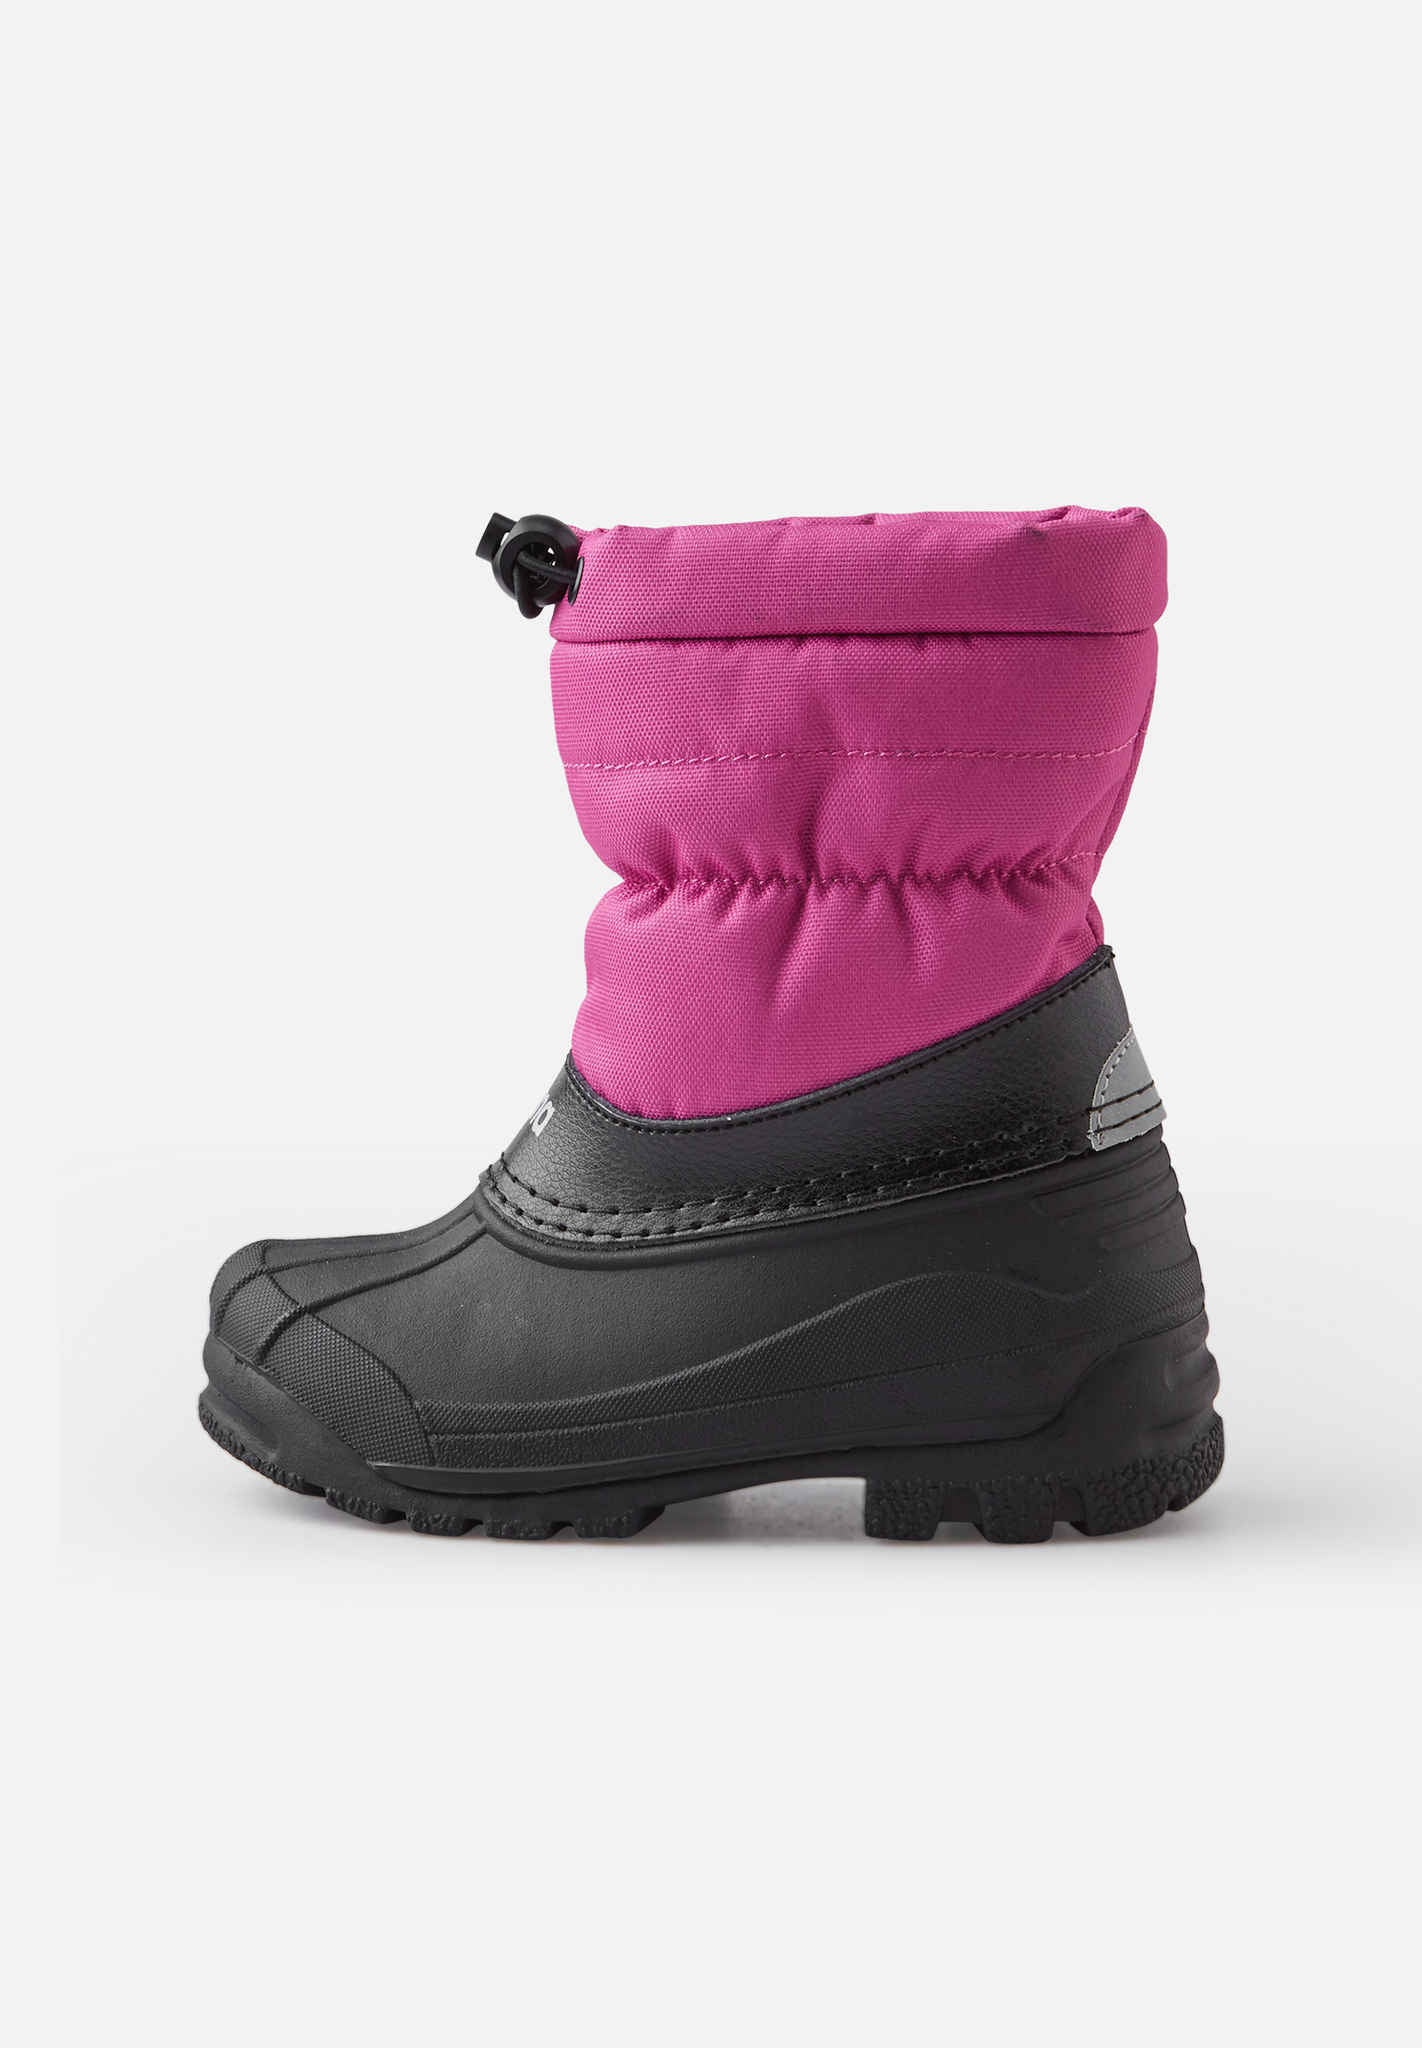 Best Kids' Snow Boots in 2021